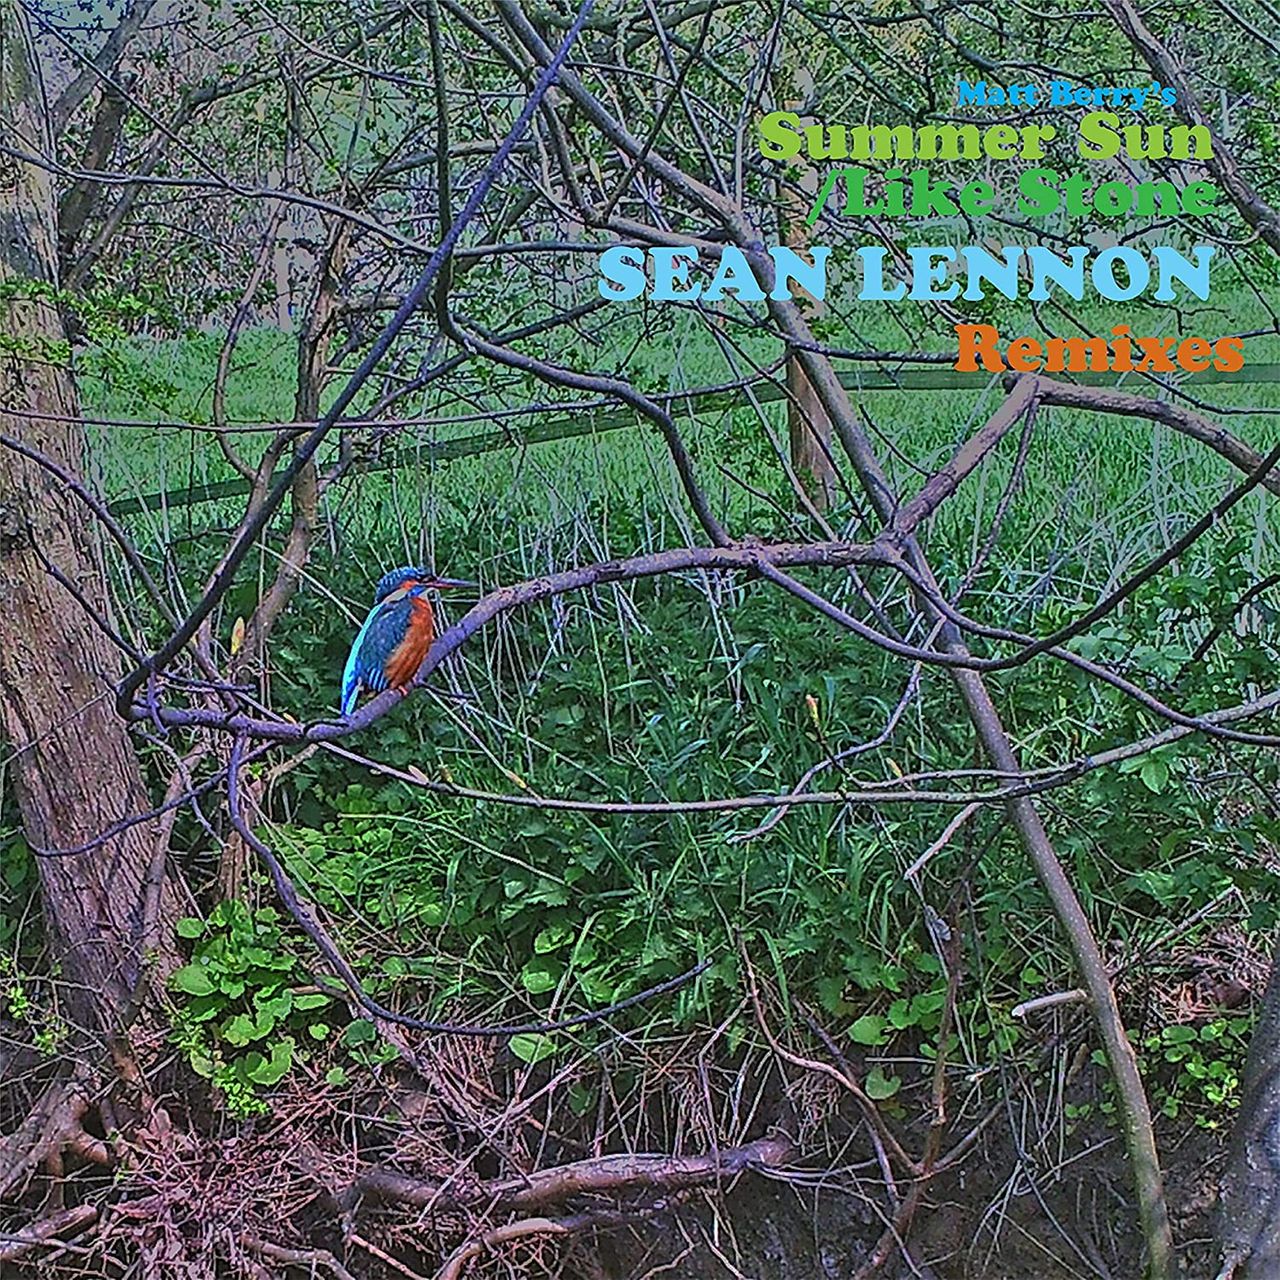 Sean Lennon Summer Sun/Like Stone - Sean Lennon Remixes - Sealed UK 12" vinyl single (12 inch record / Maxi-single) AJX621T